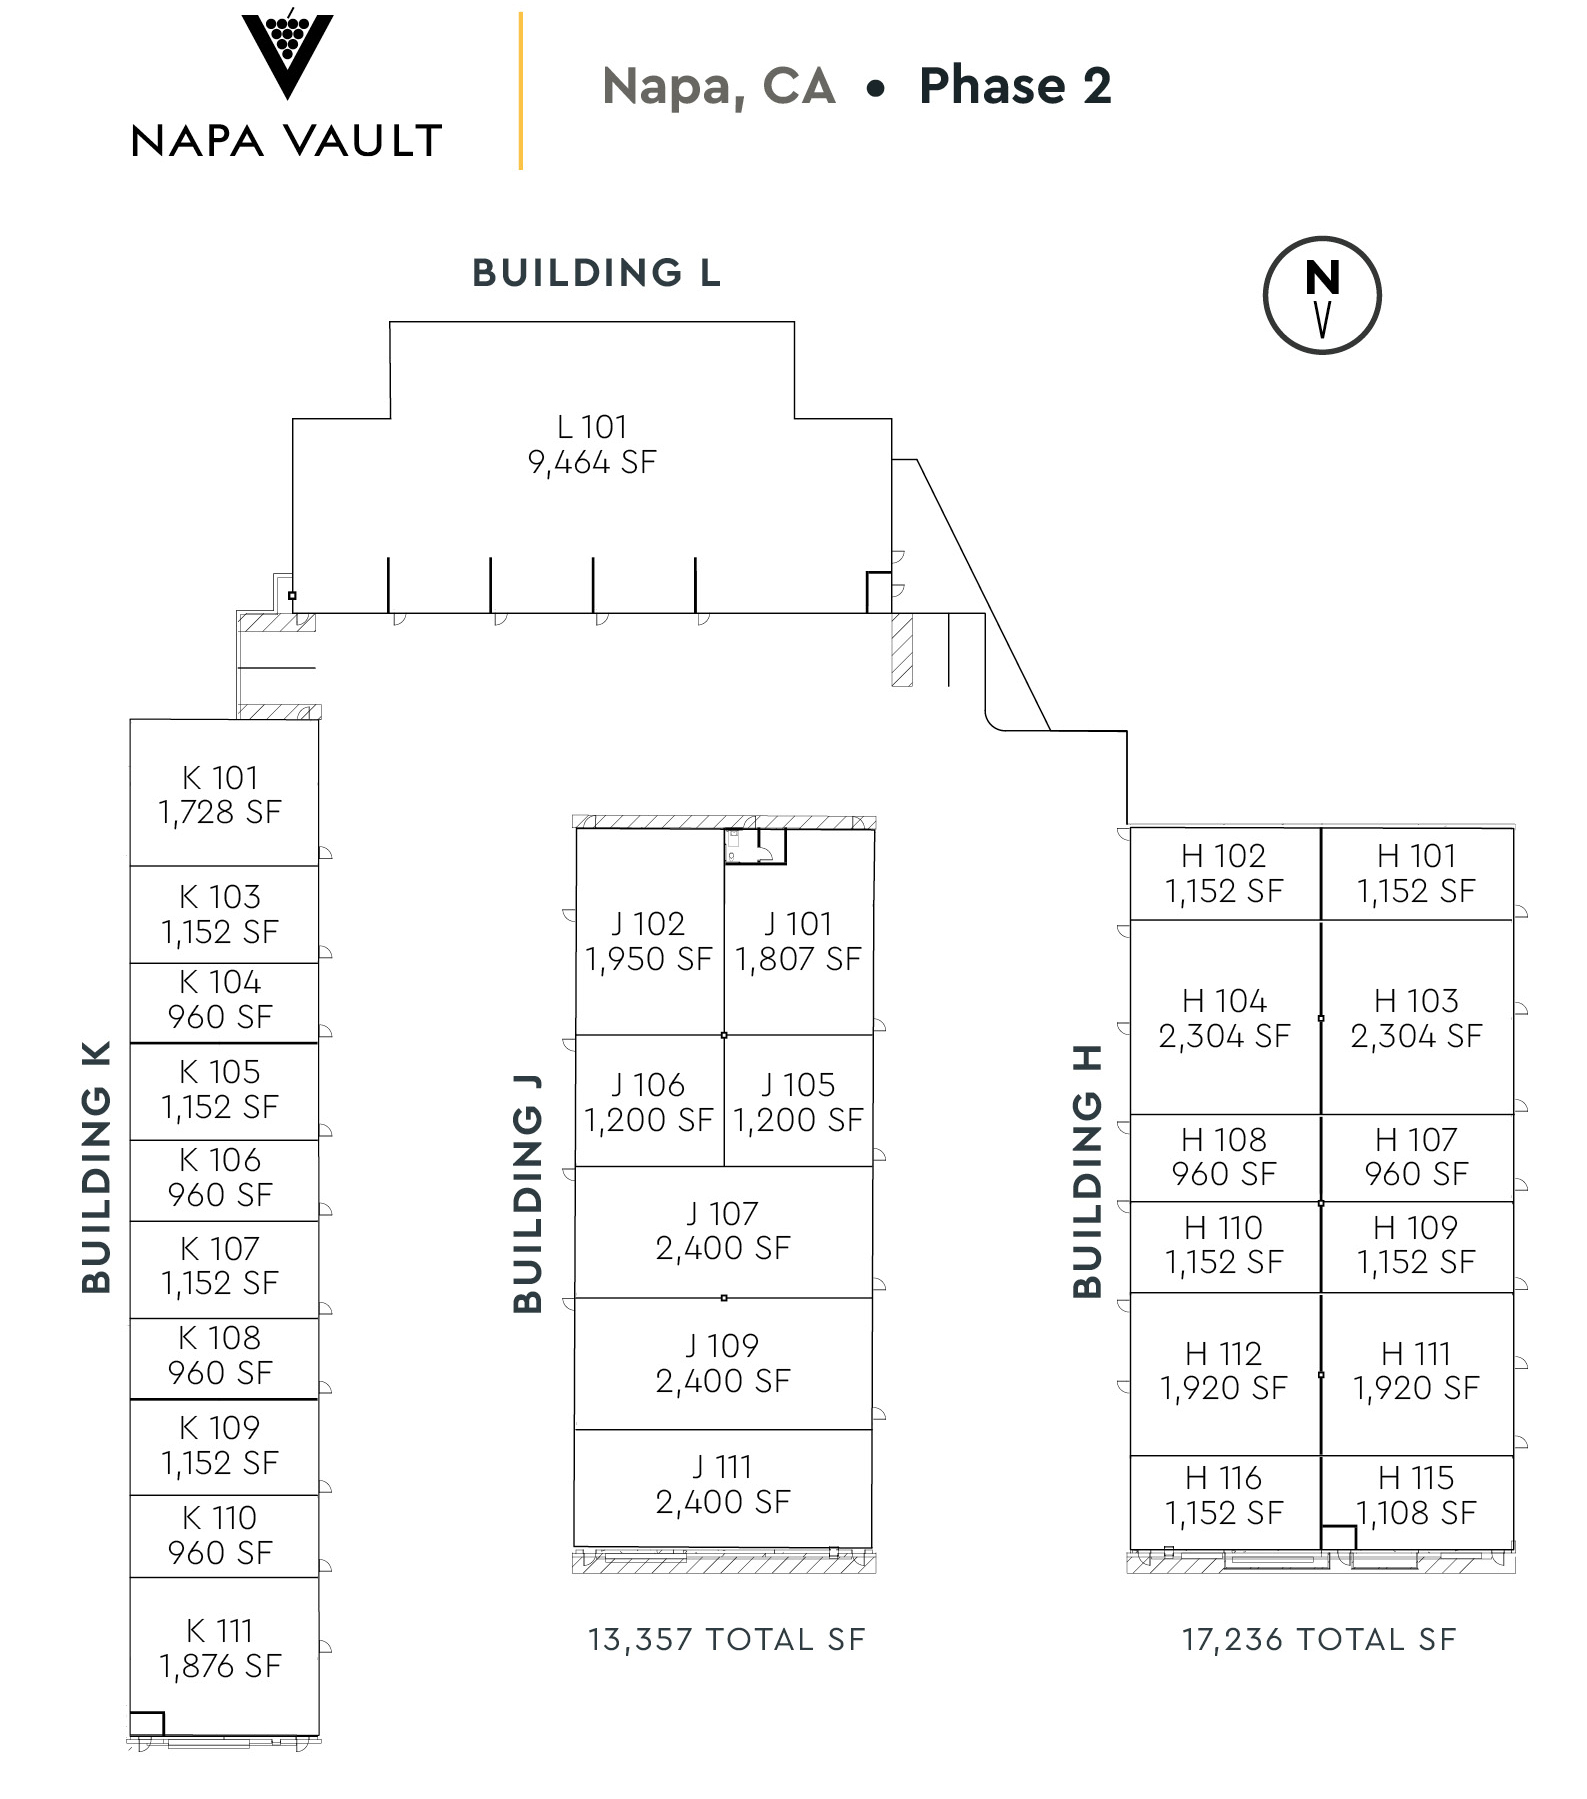 Napa Vault Phase 2